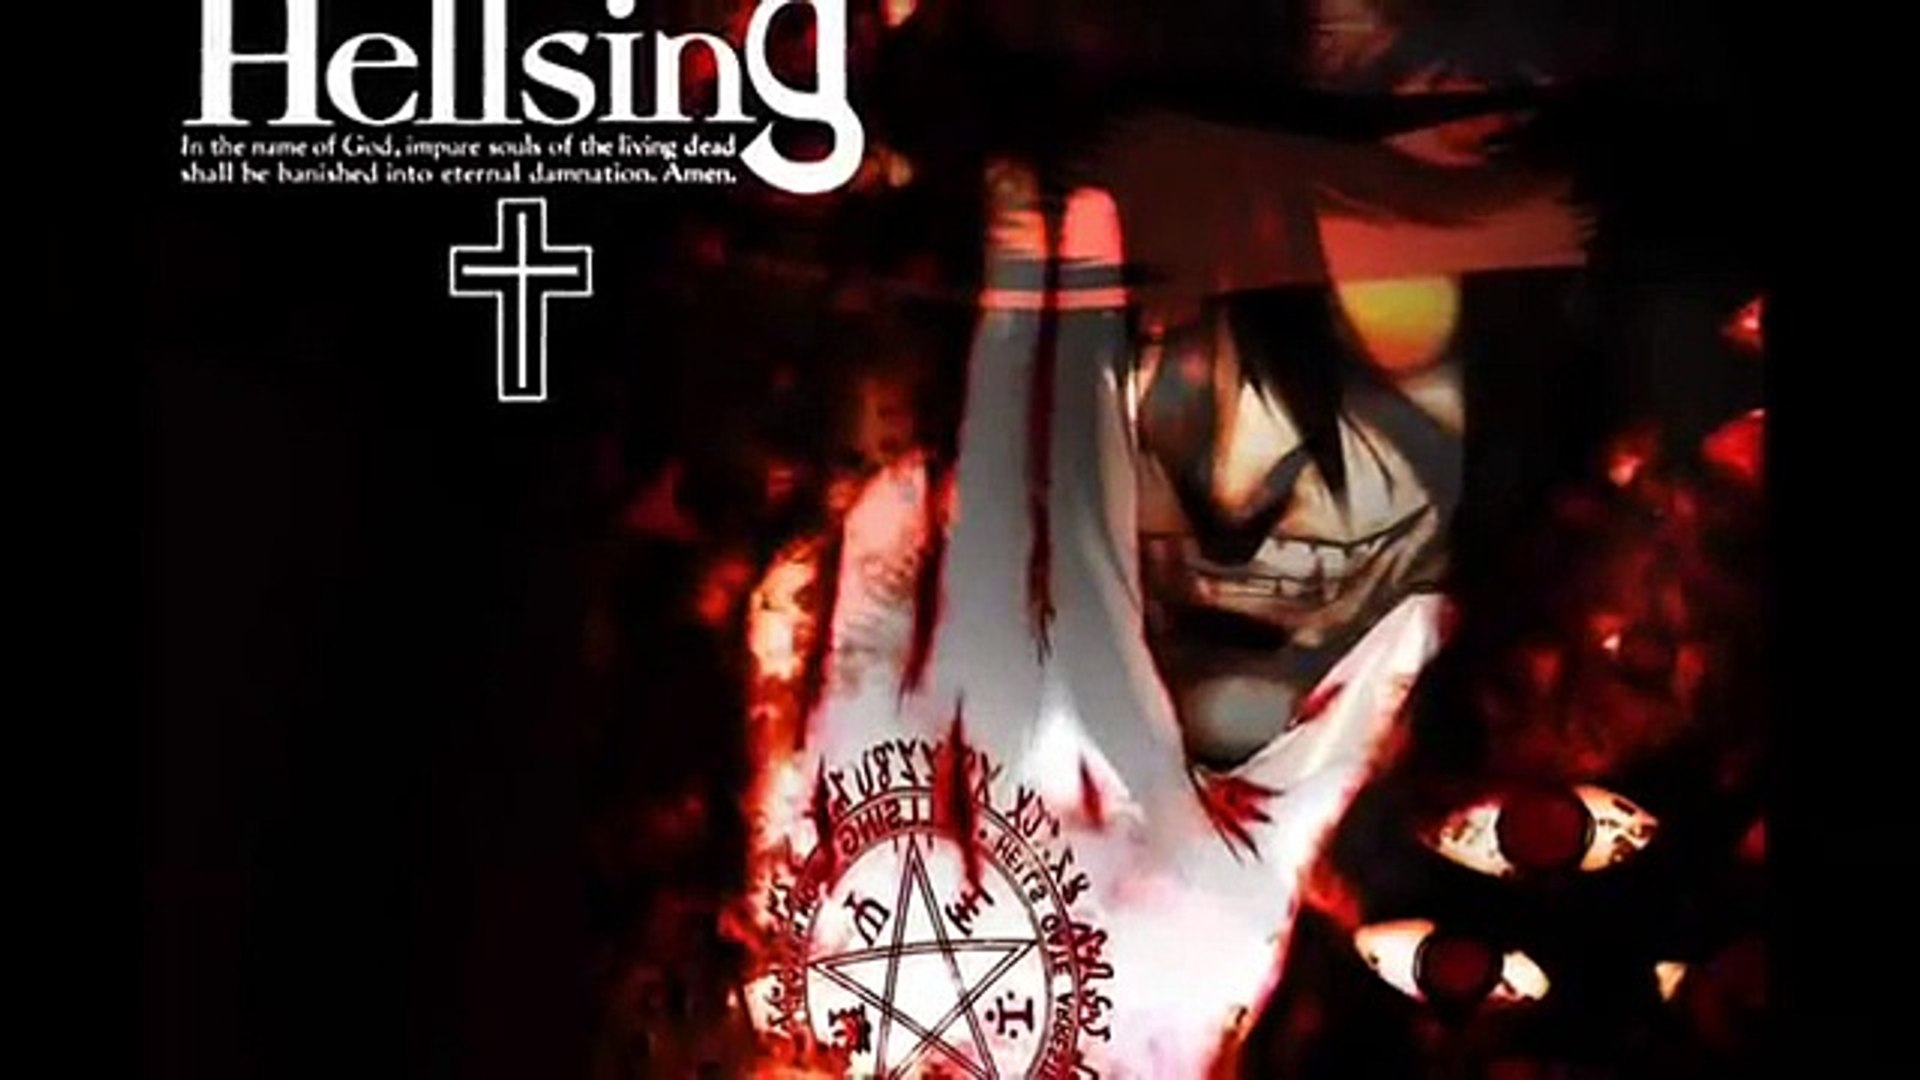 Alucard (Hellsing) - song and lyrics by Tauz